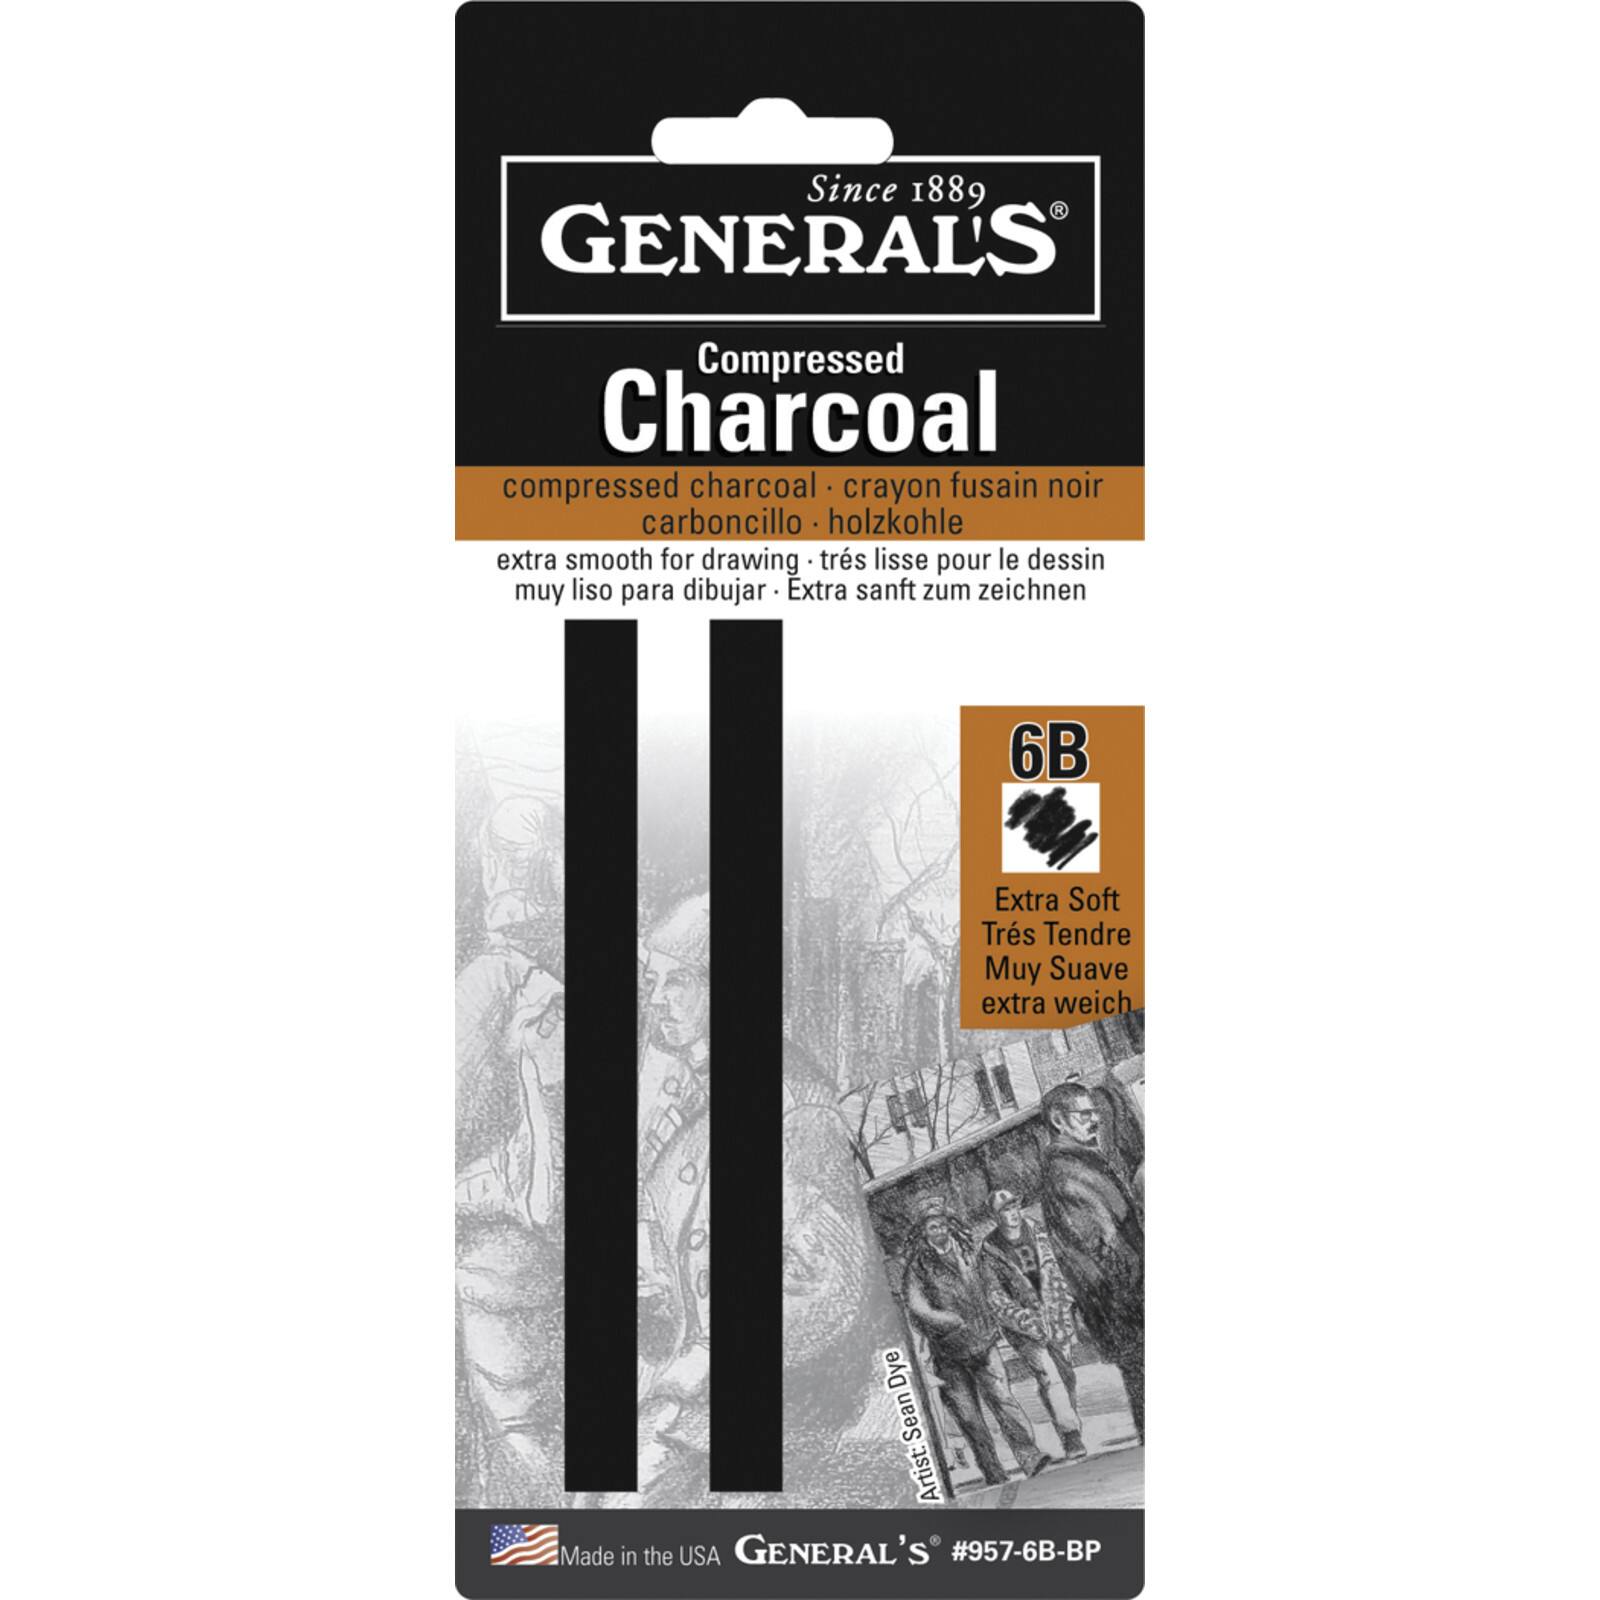 6B COMPRESSED CHARCOAL STICK GENERALS